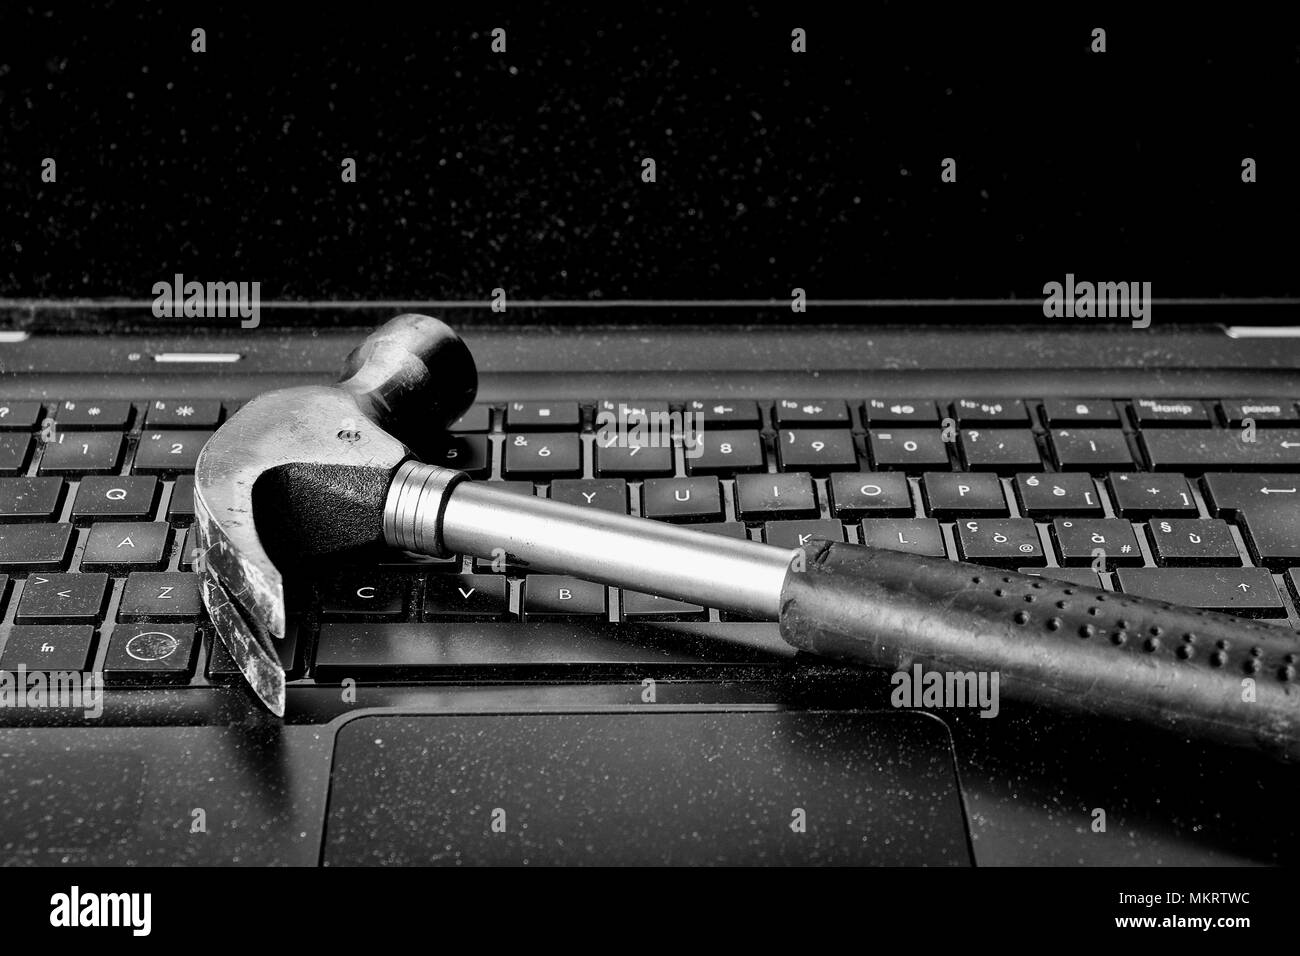 Hammer laying on keyboard of broken laptop Stock Photo